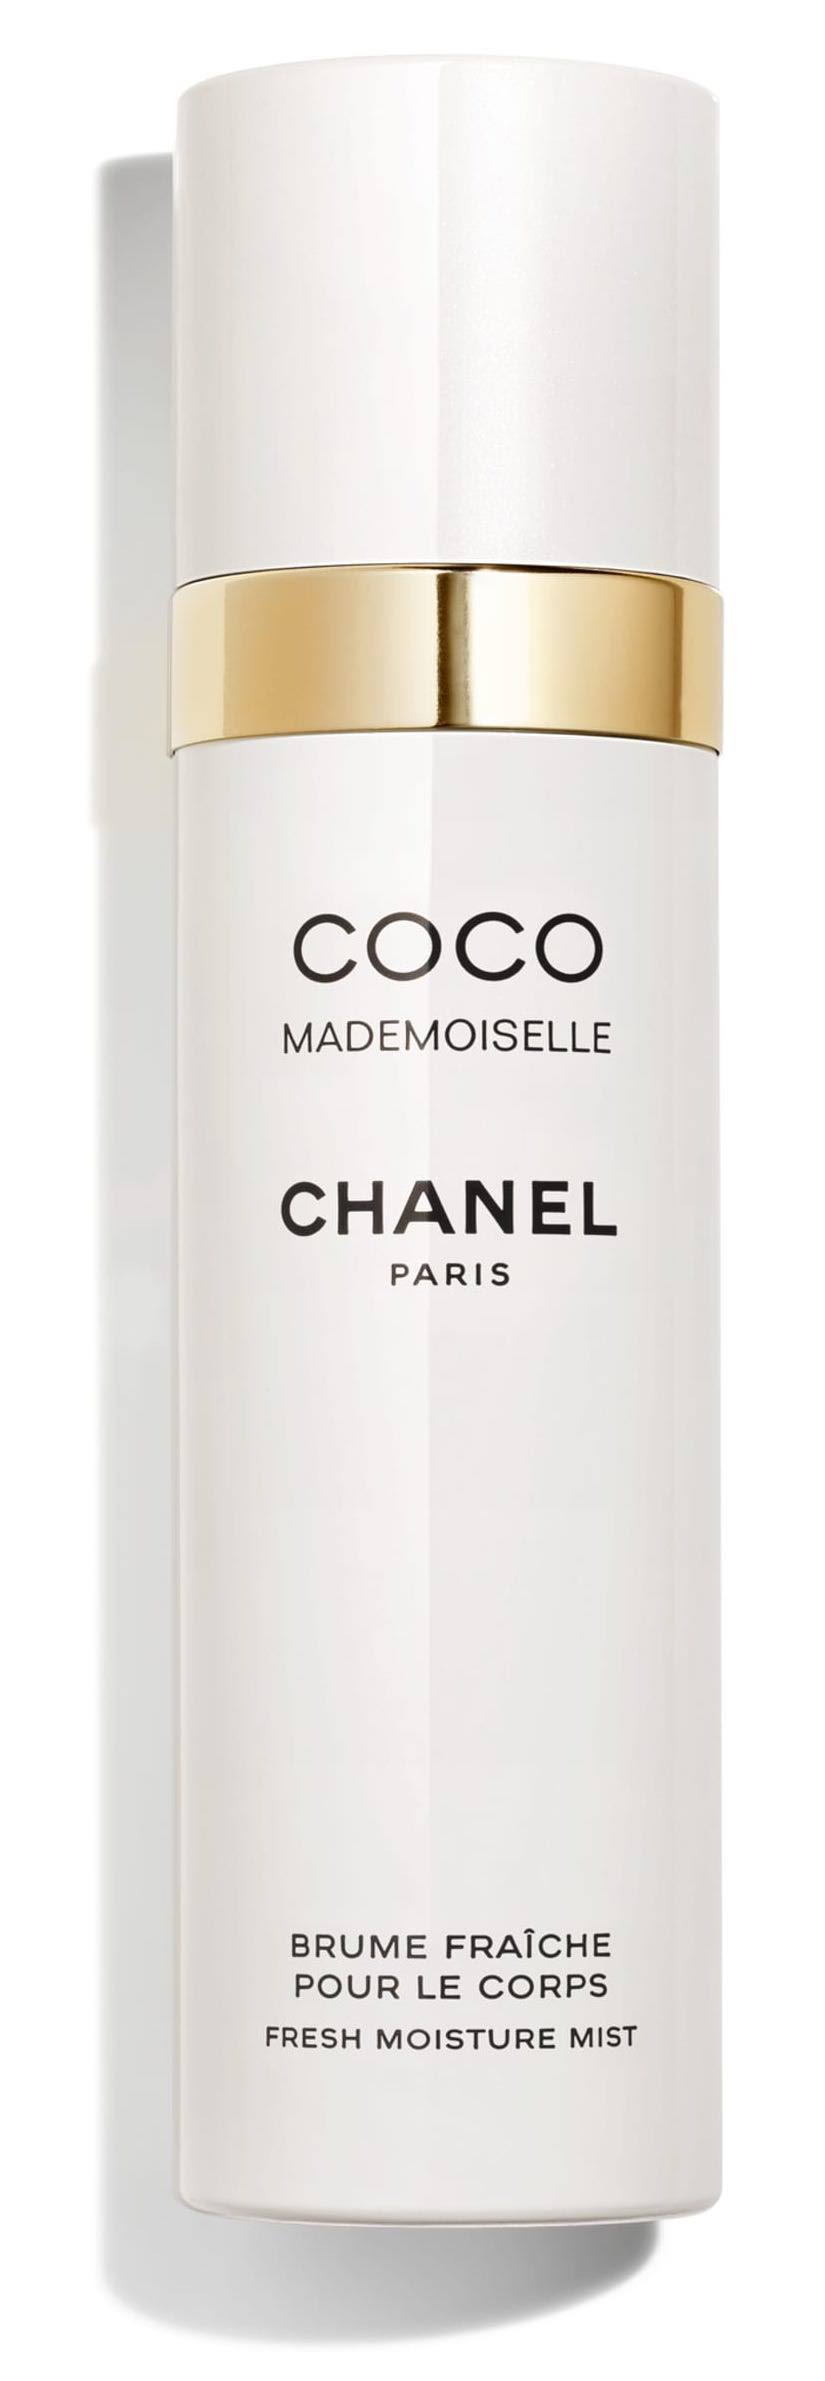 Chanel Coco Mademoiselle Moisture Mist - 100ml